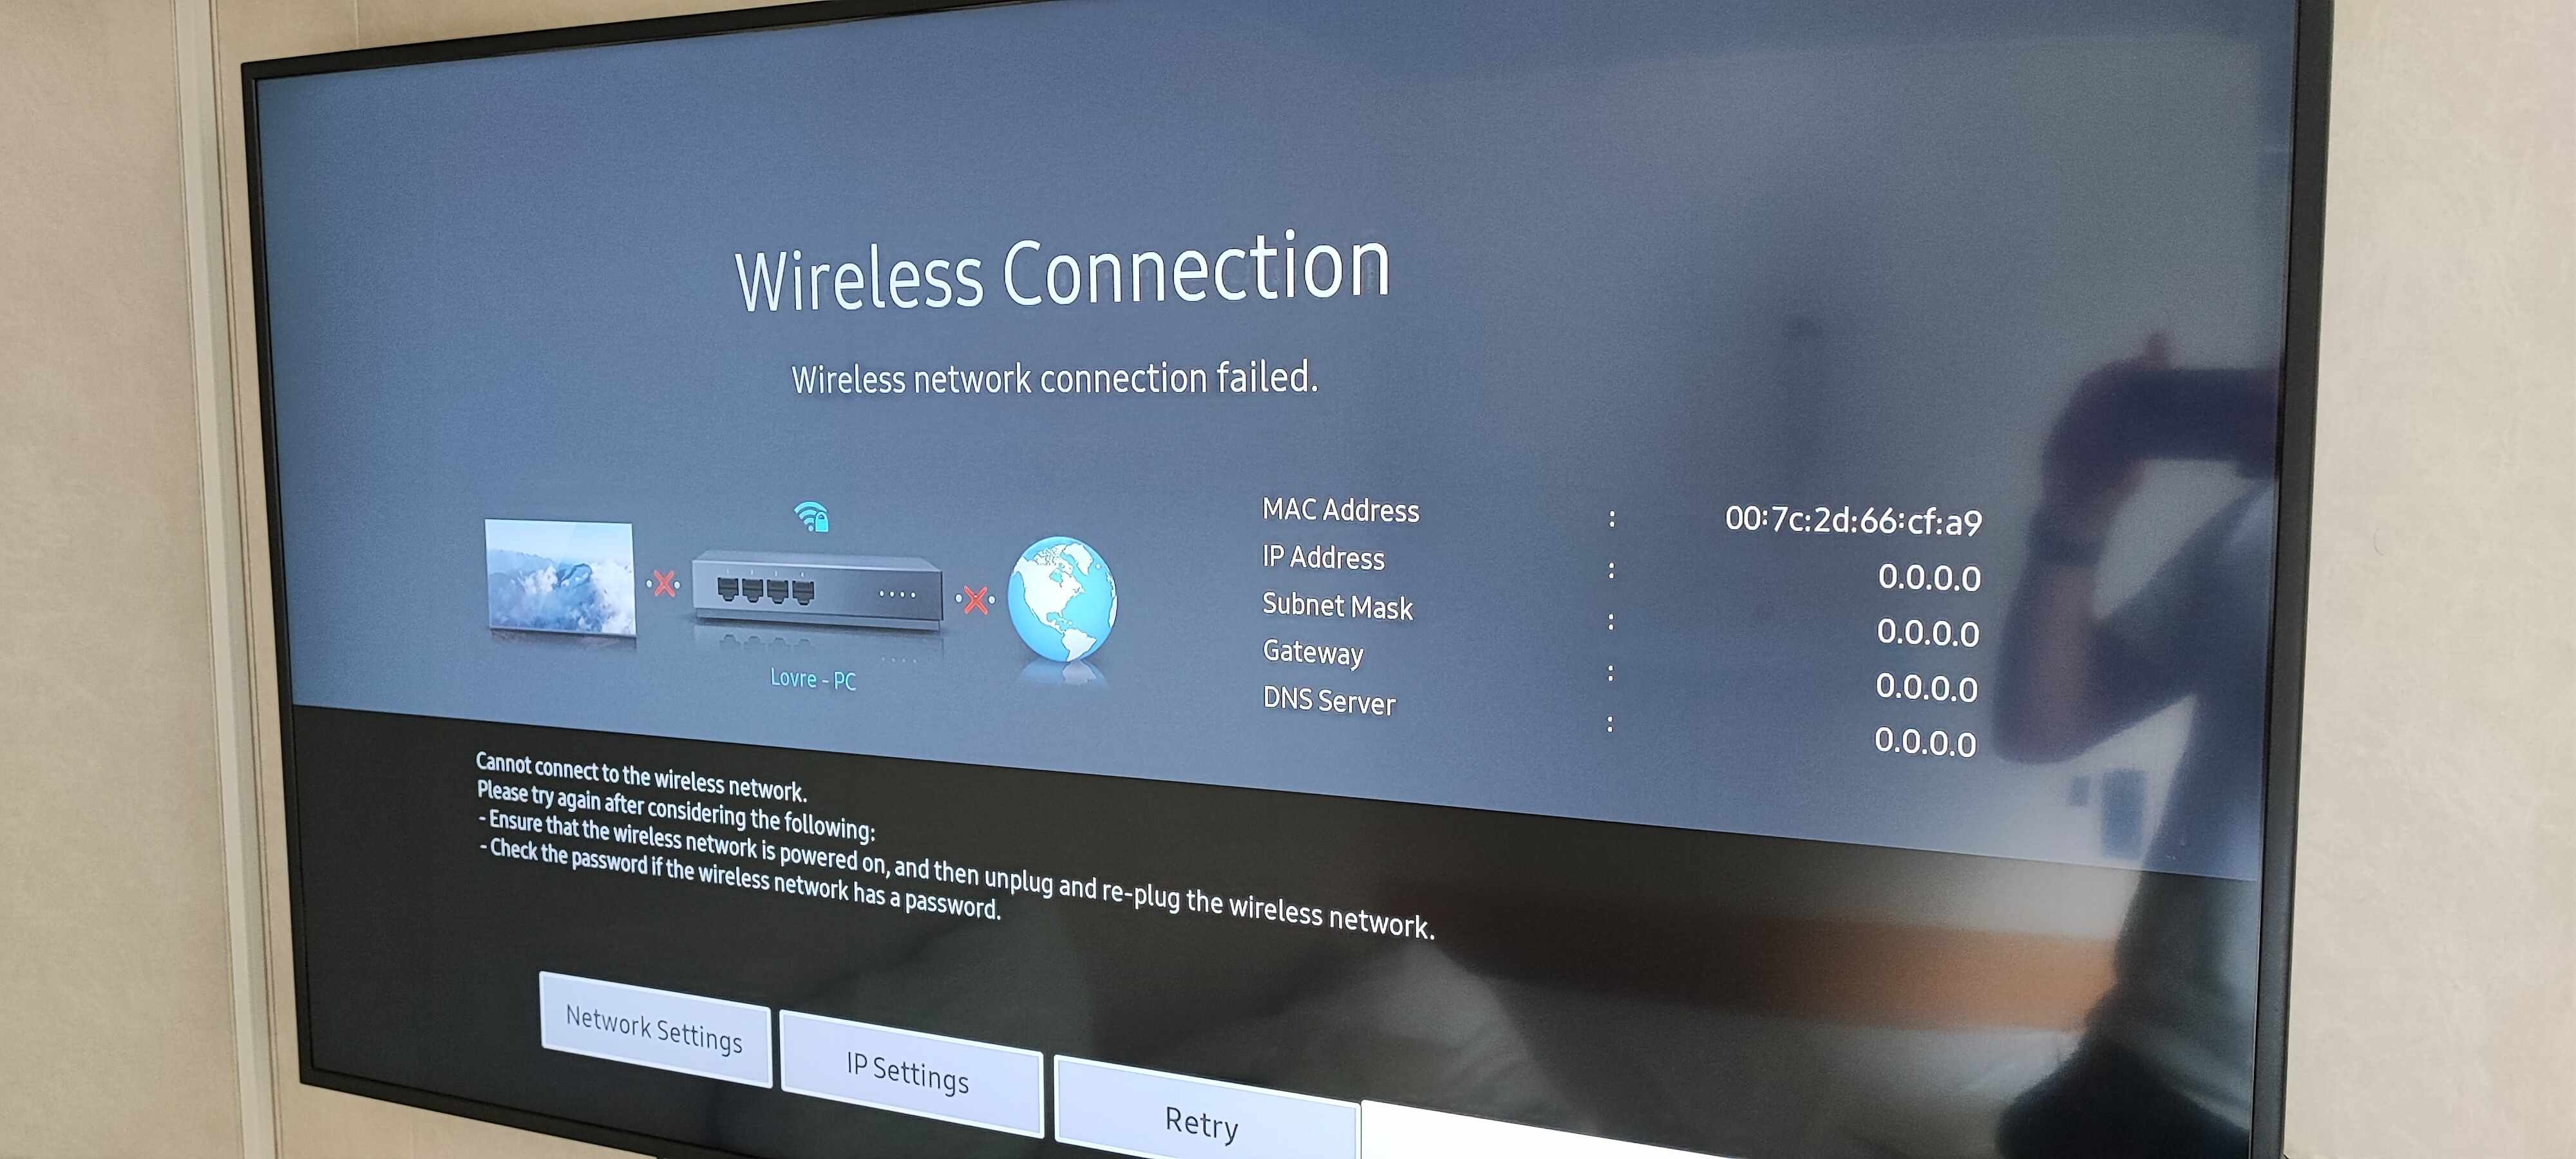 Hotspot Connection: Phone To TV Setup